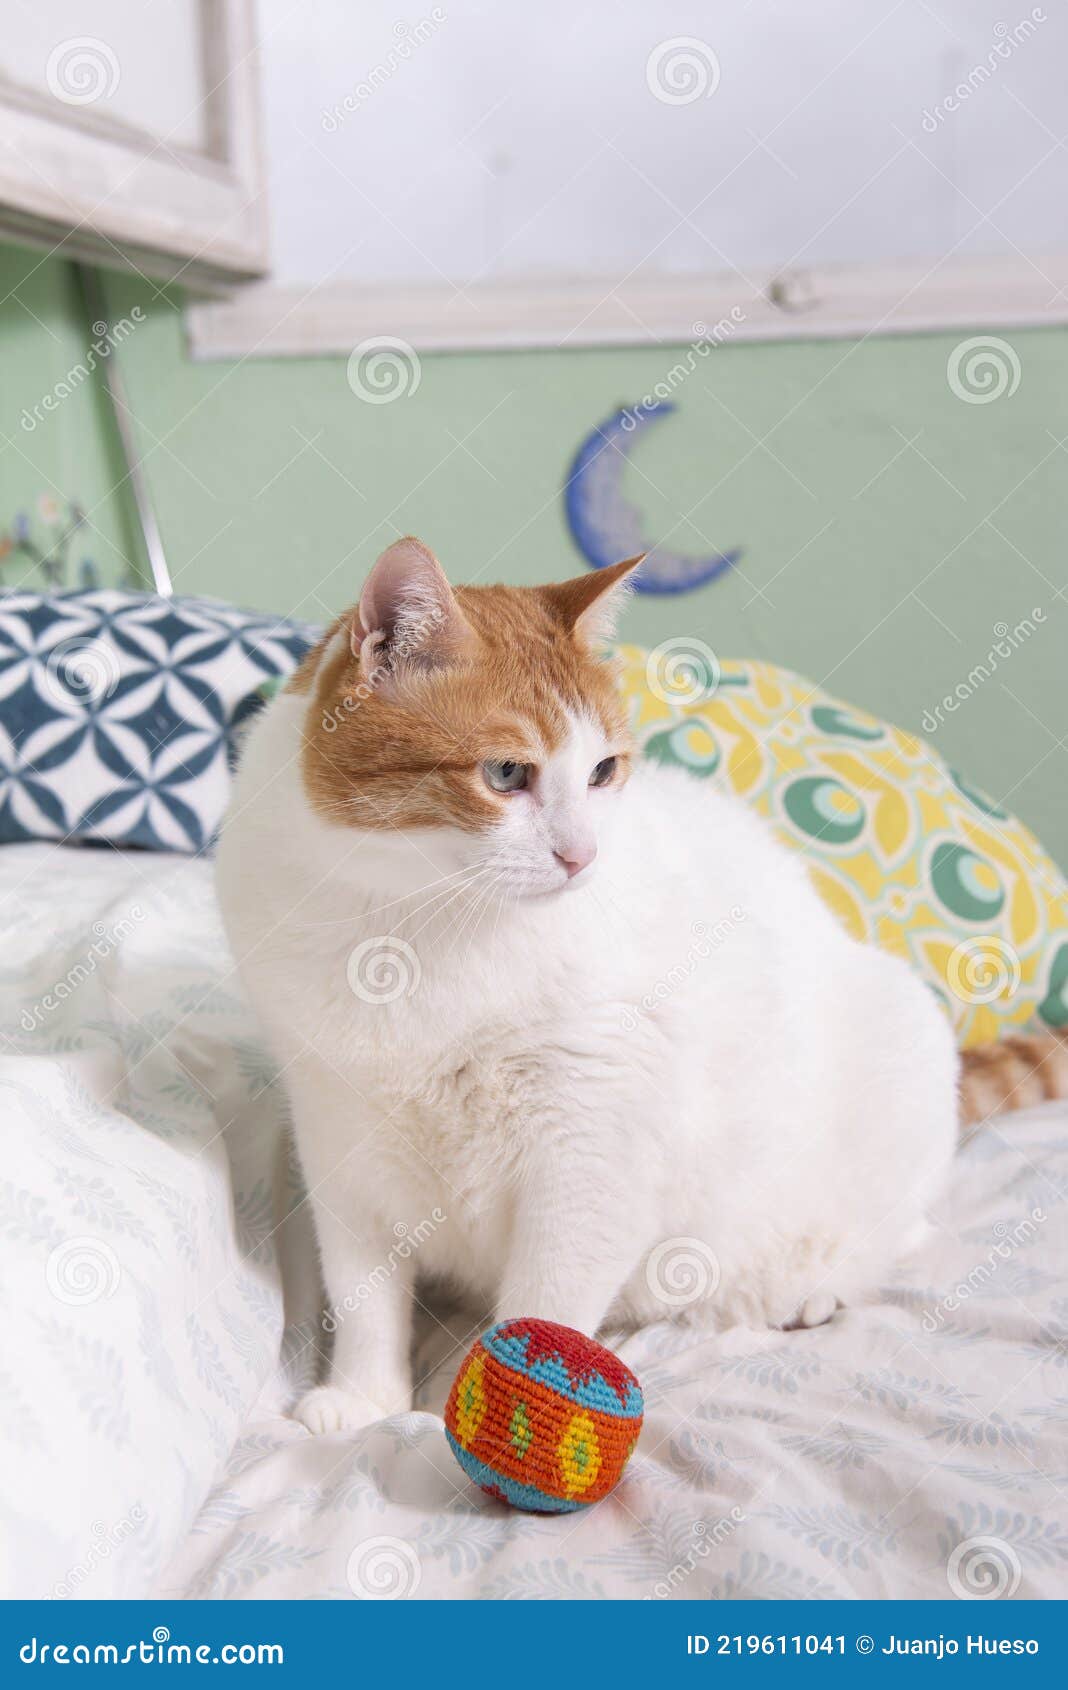 gorgeous white and orange cat